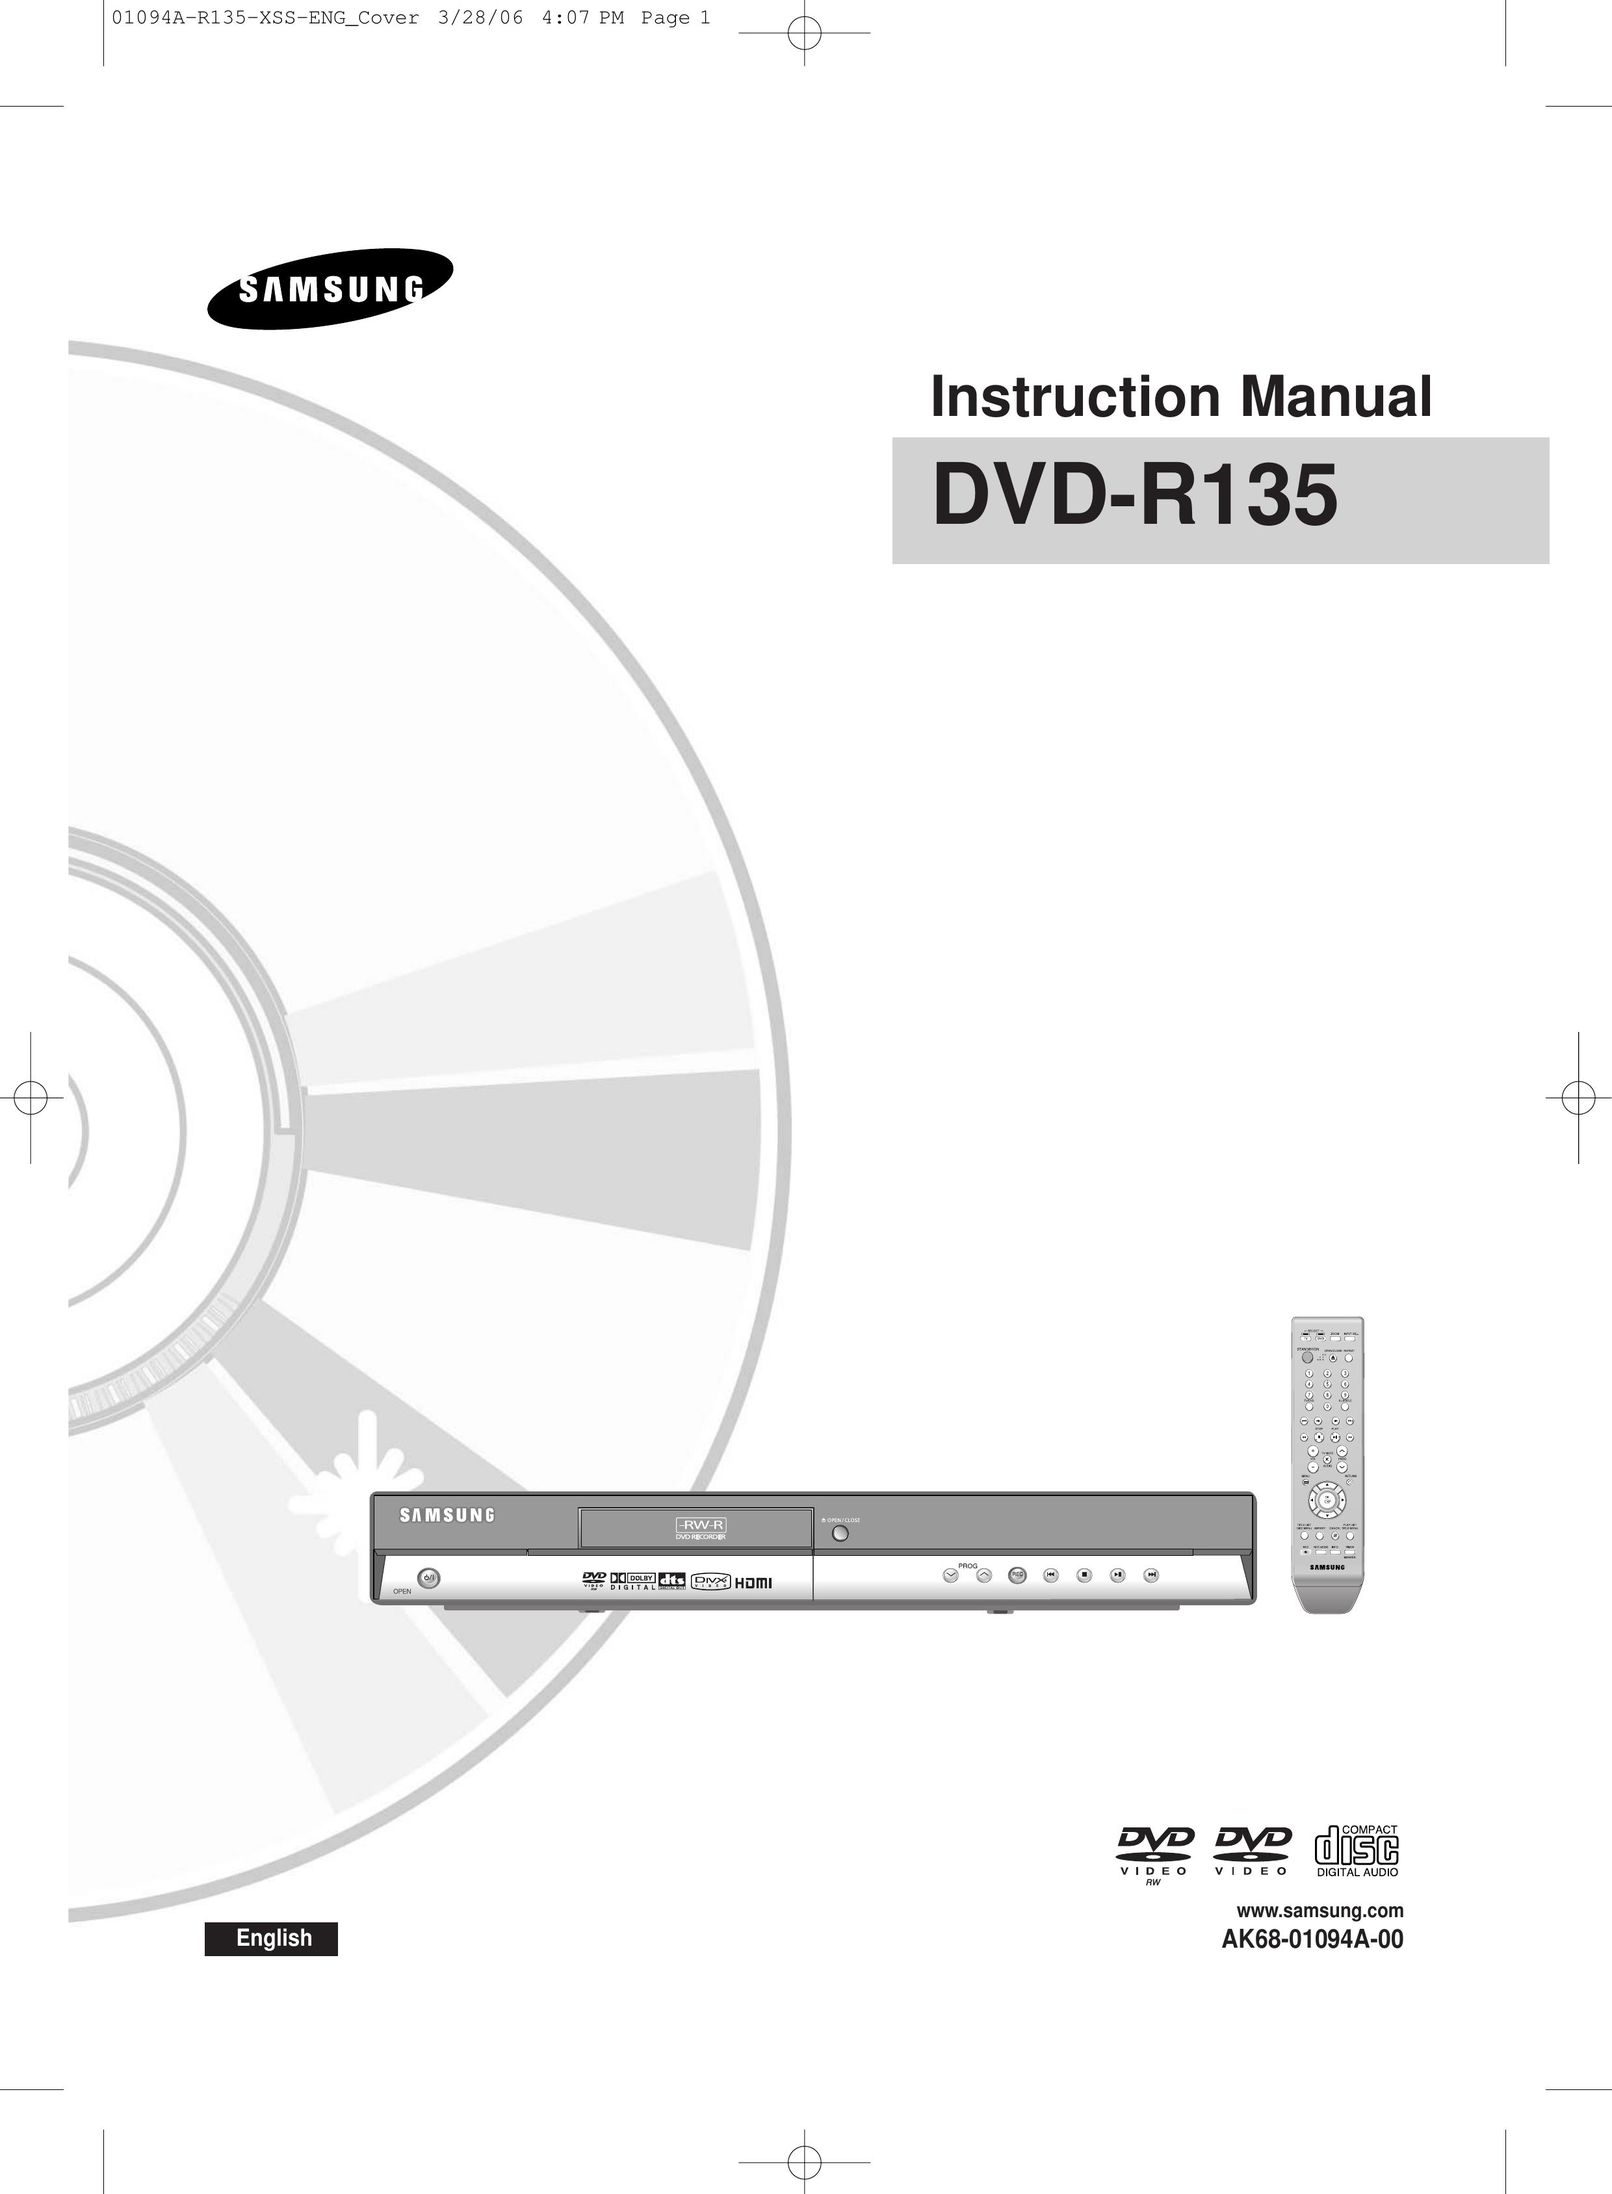 Samsung DVD-R135 DVD Recorder User Manual